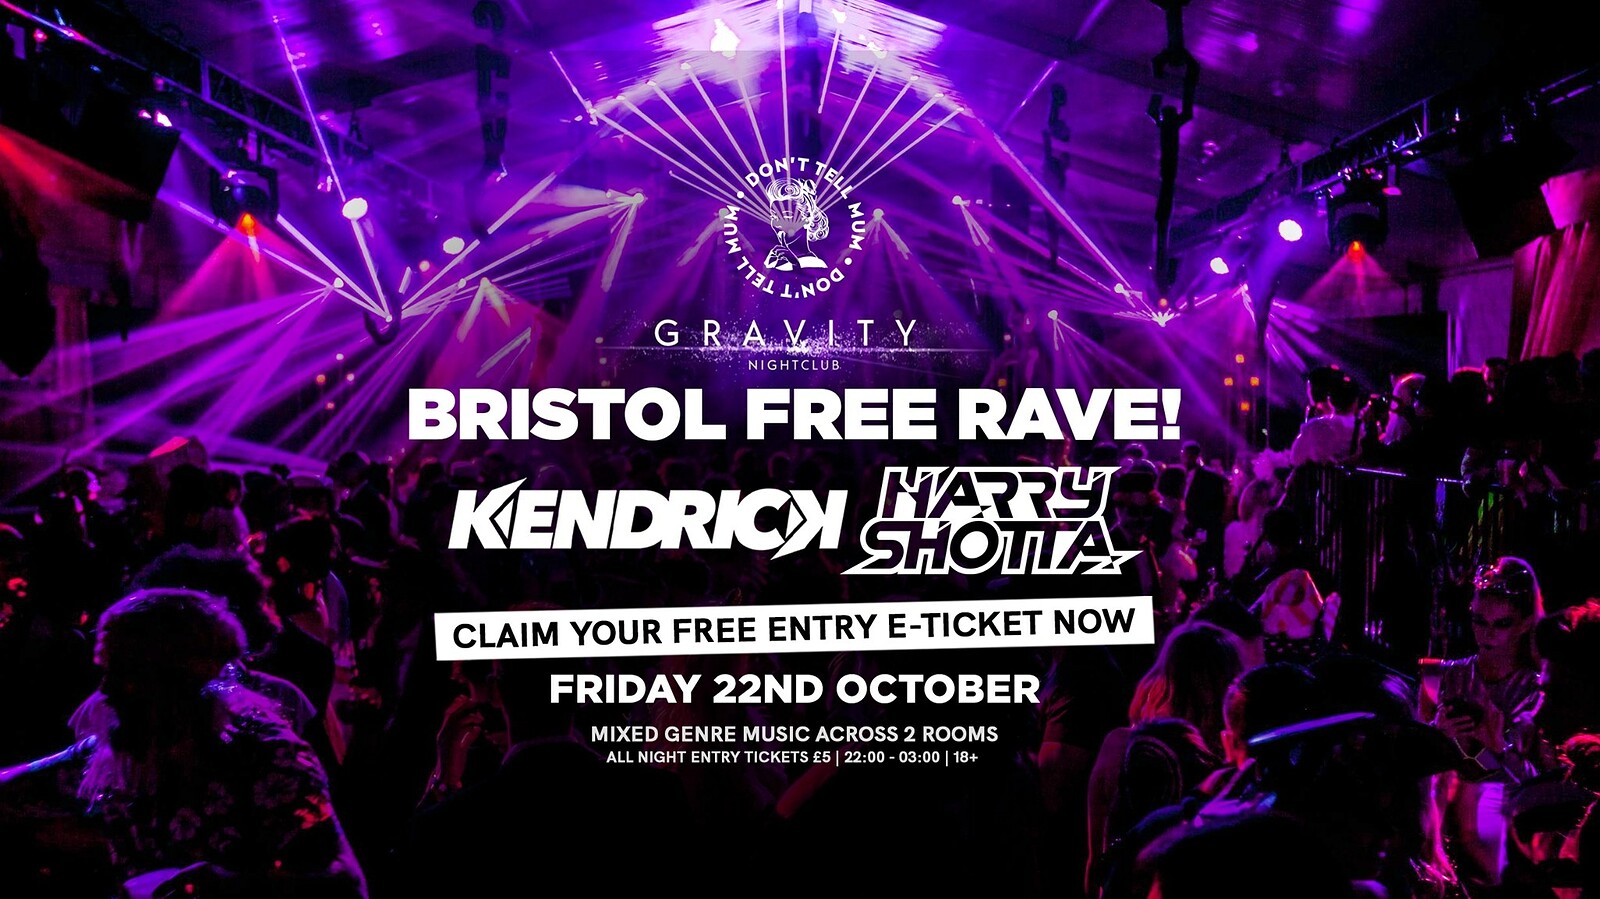 DTM • Bristol FREE RAVE w Kendrick & Harry Shotta at Gravity